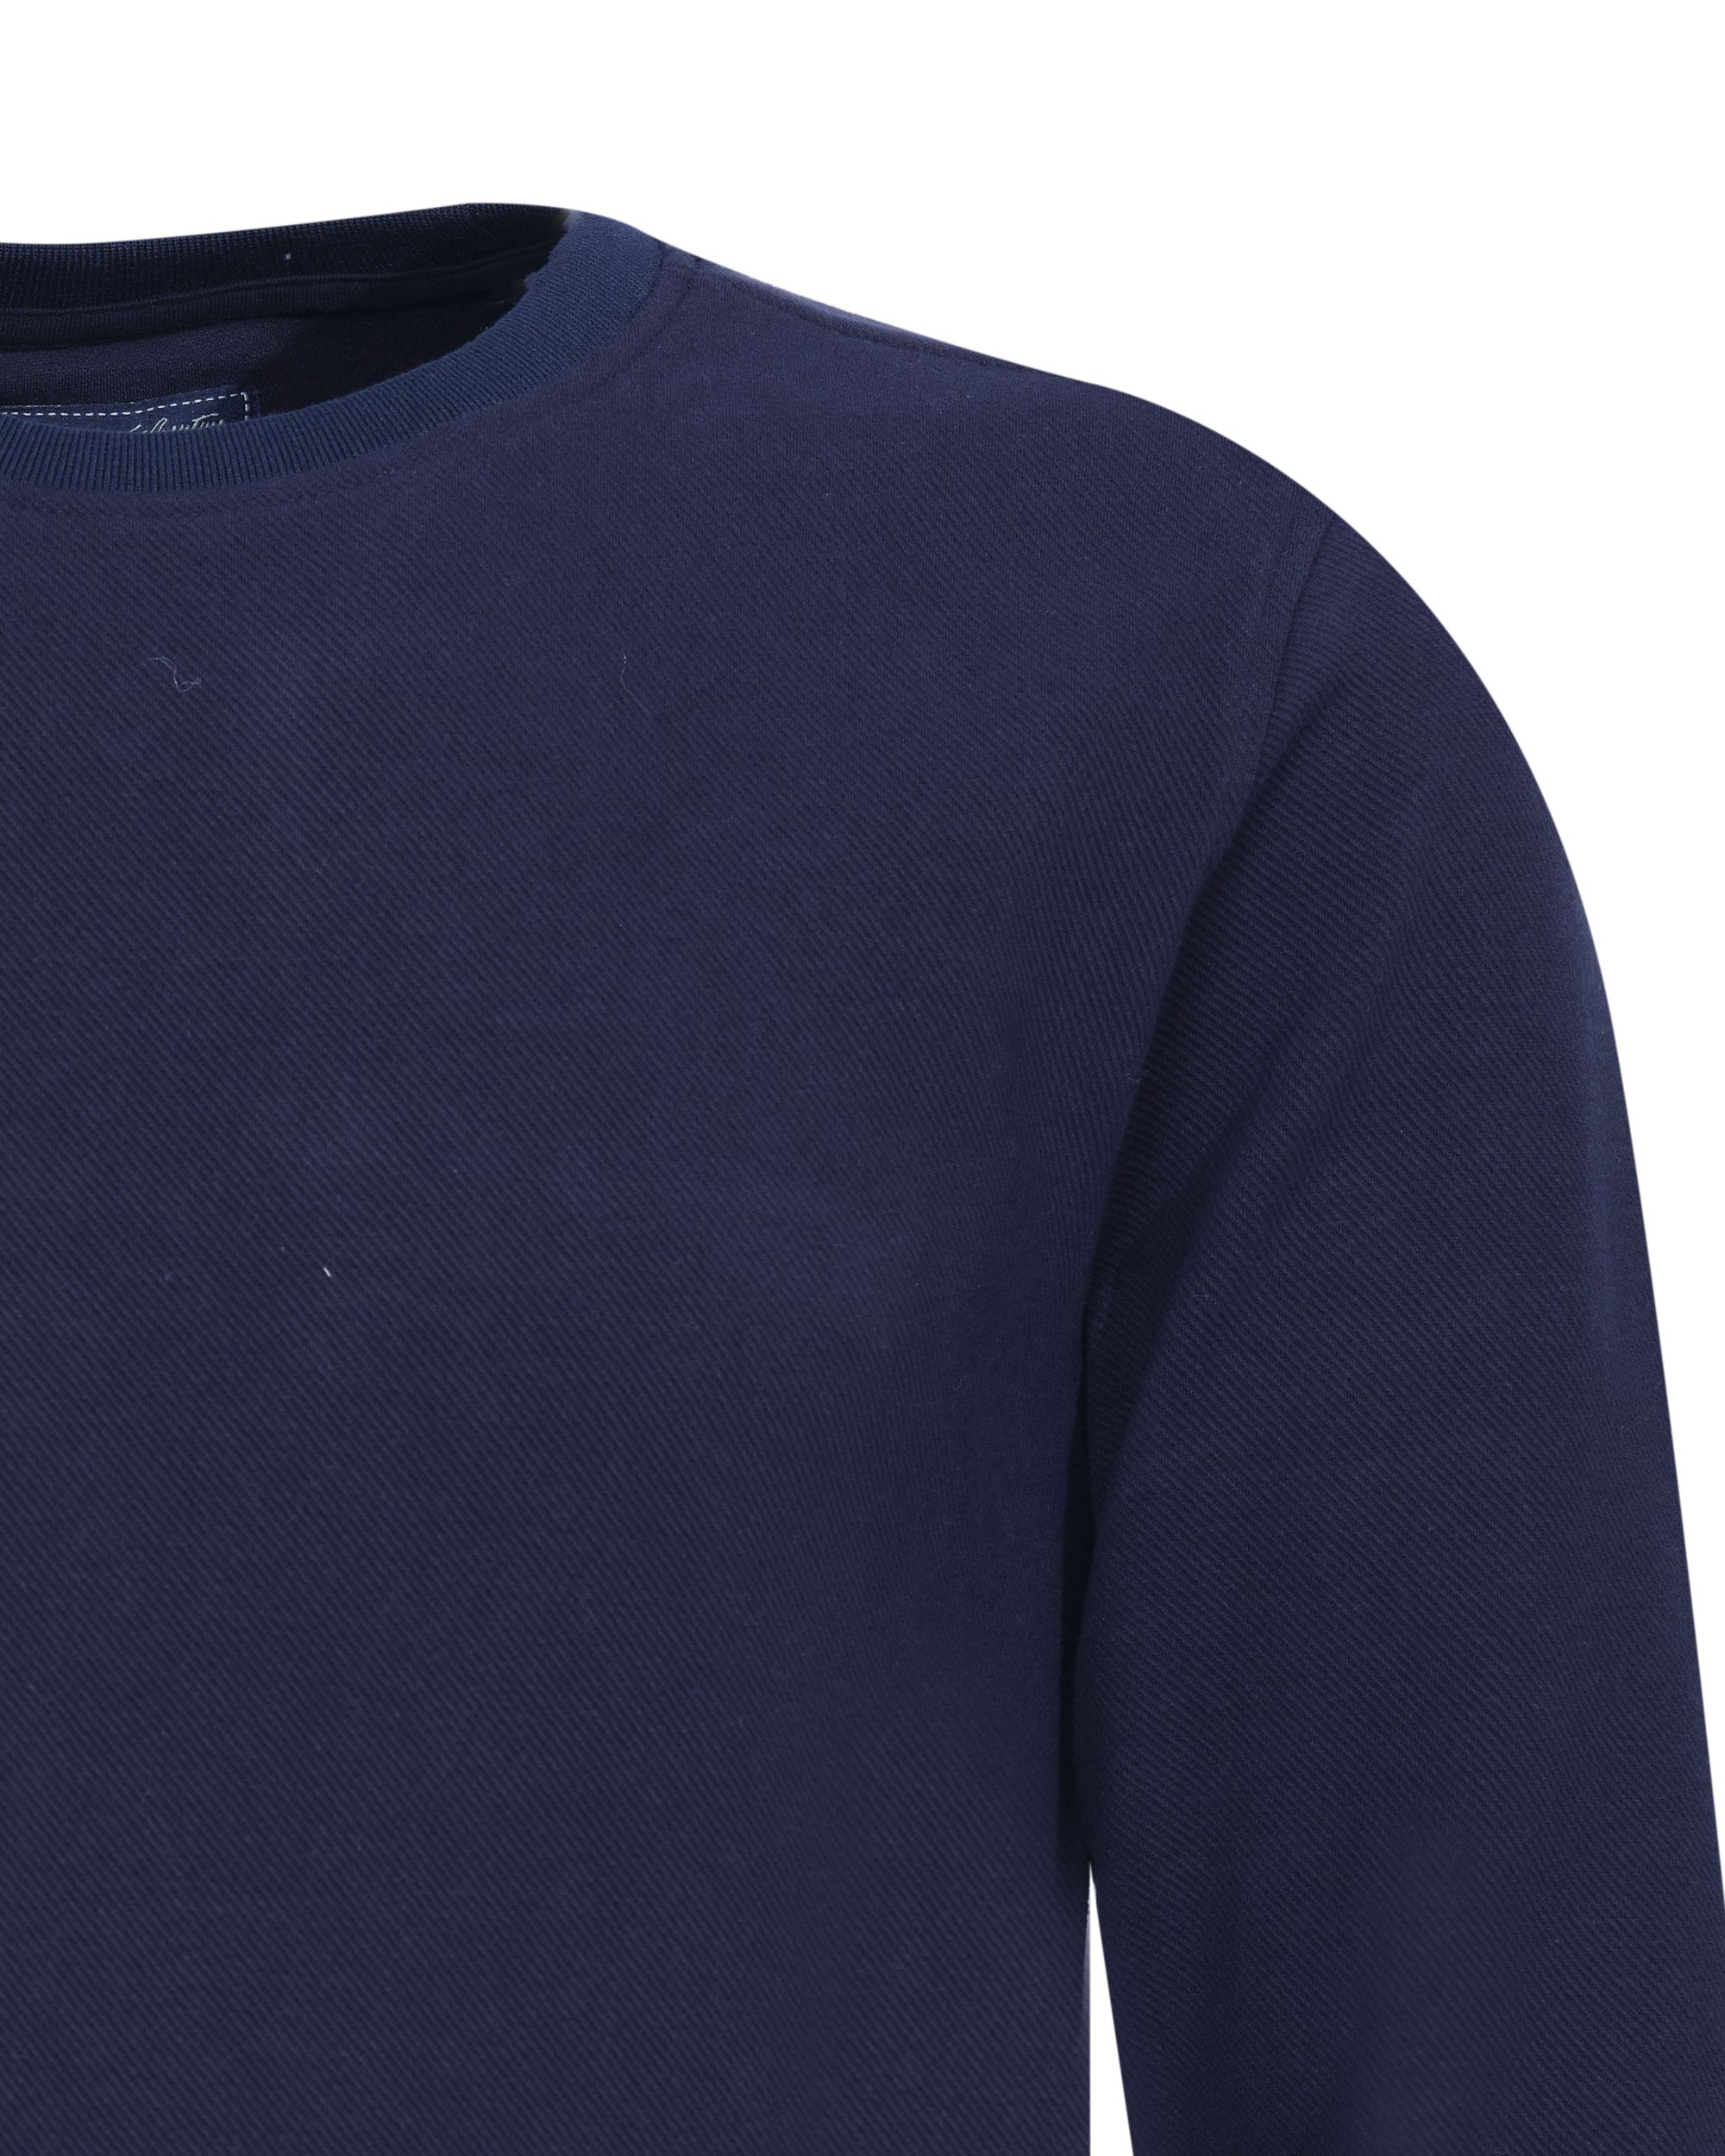 Campbell Sweater Navy uni 076971-002-L